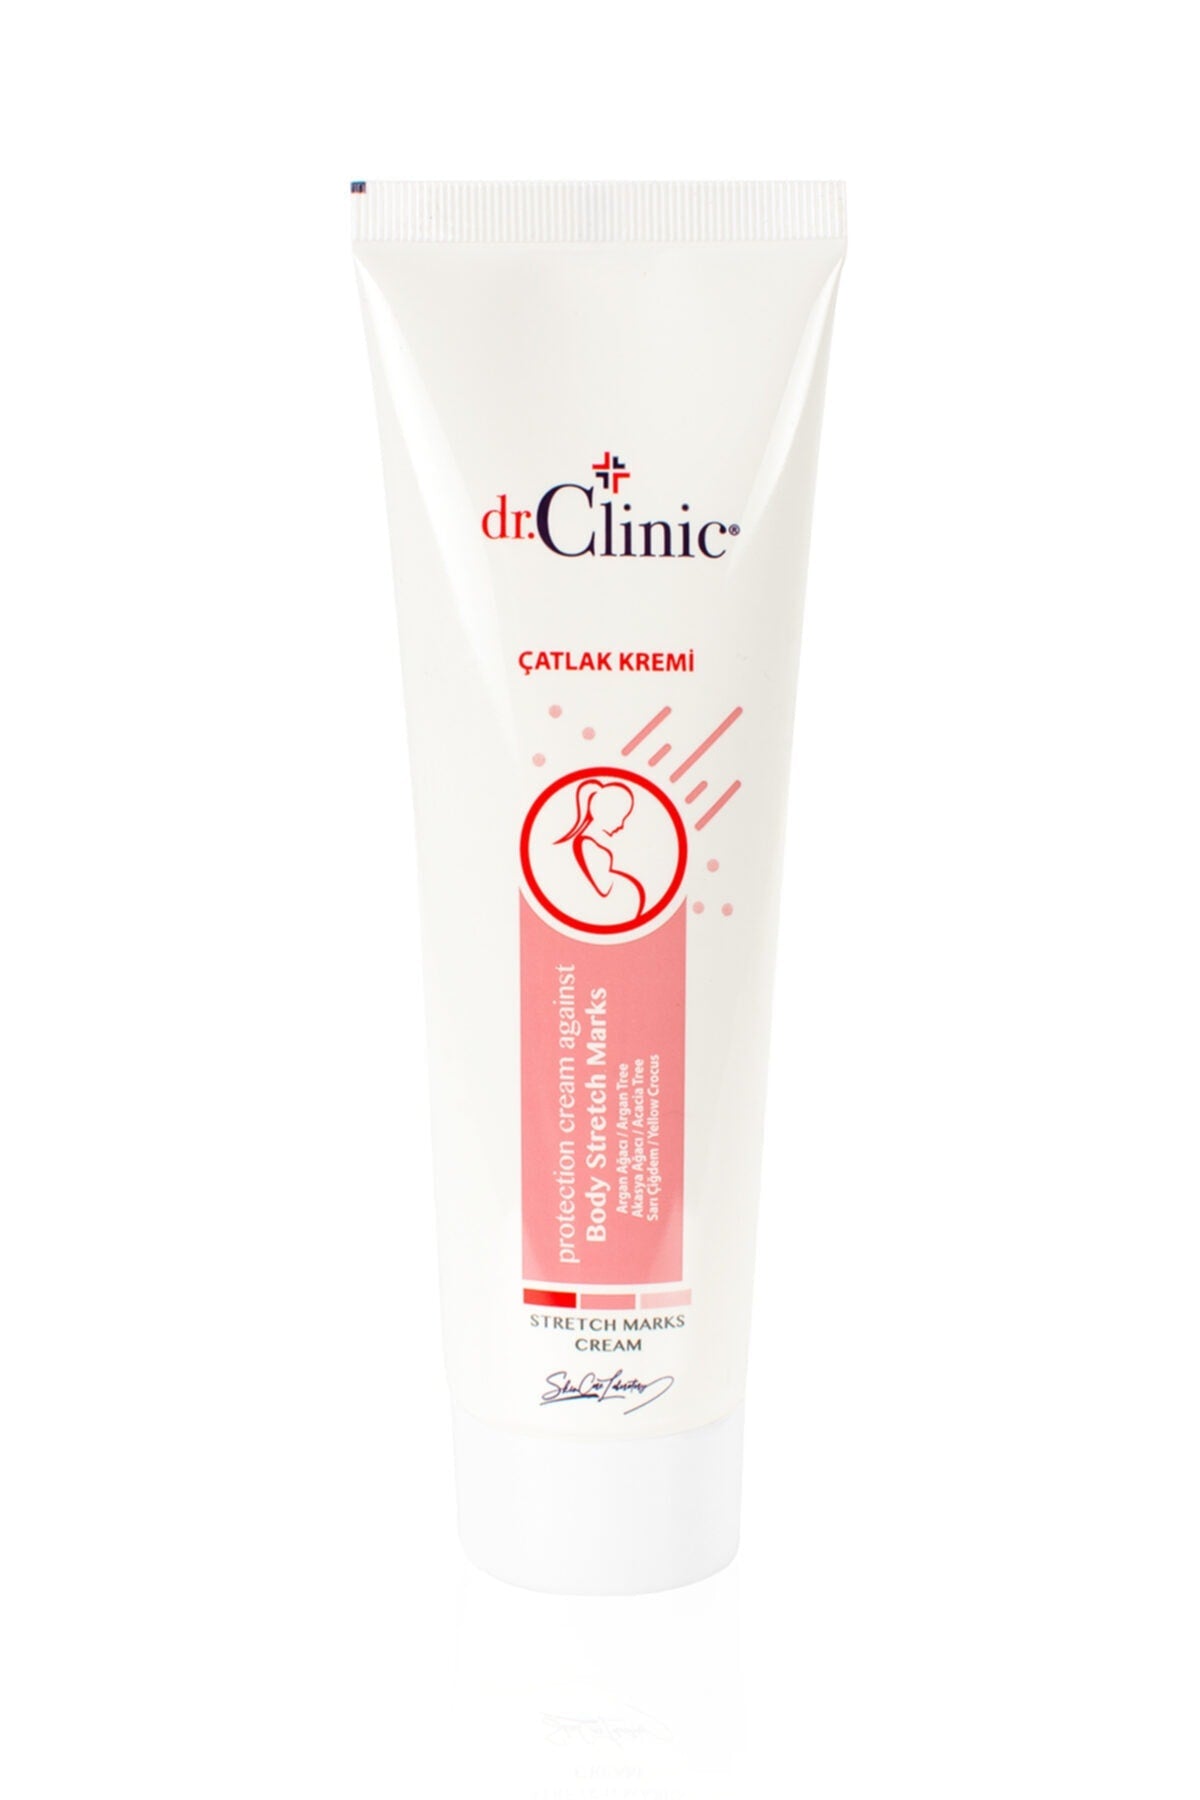 dr clinic body stretch marks cream 150